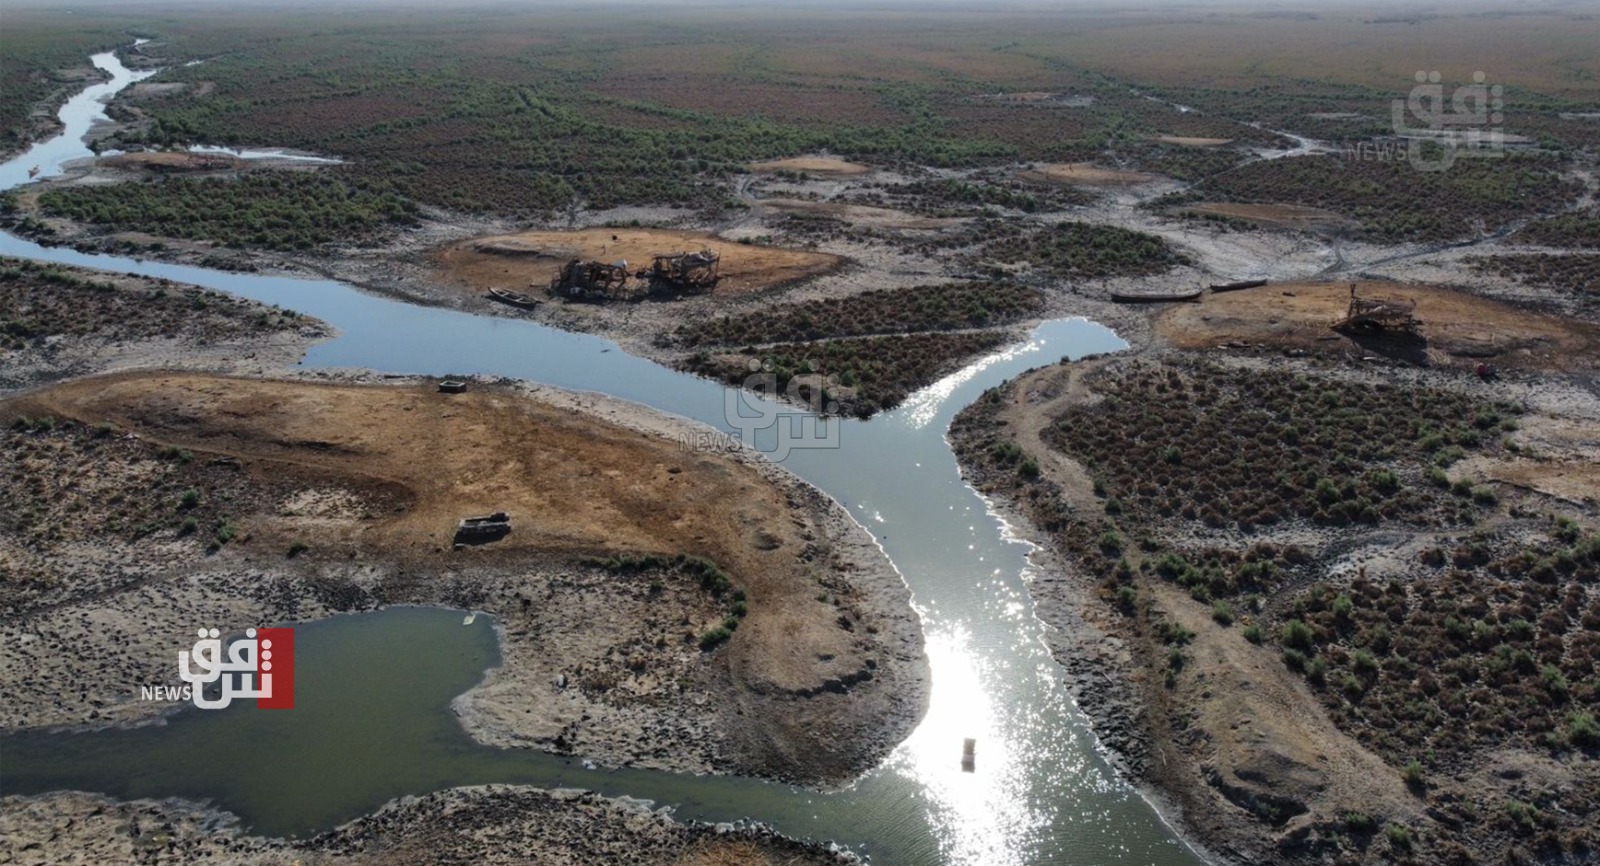 Shafaq News documents unprecedented drought grips southern Iraq